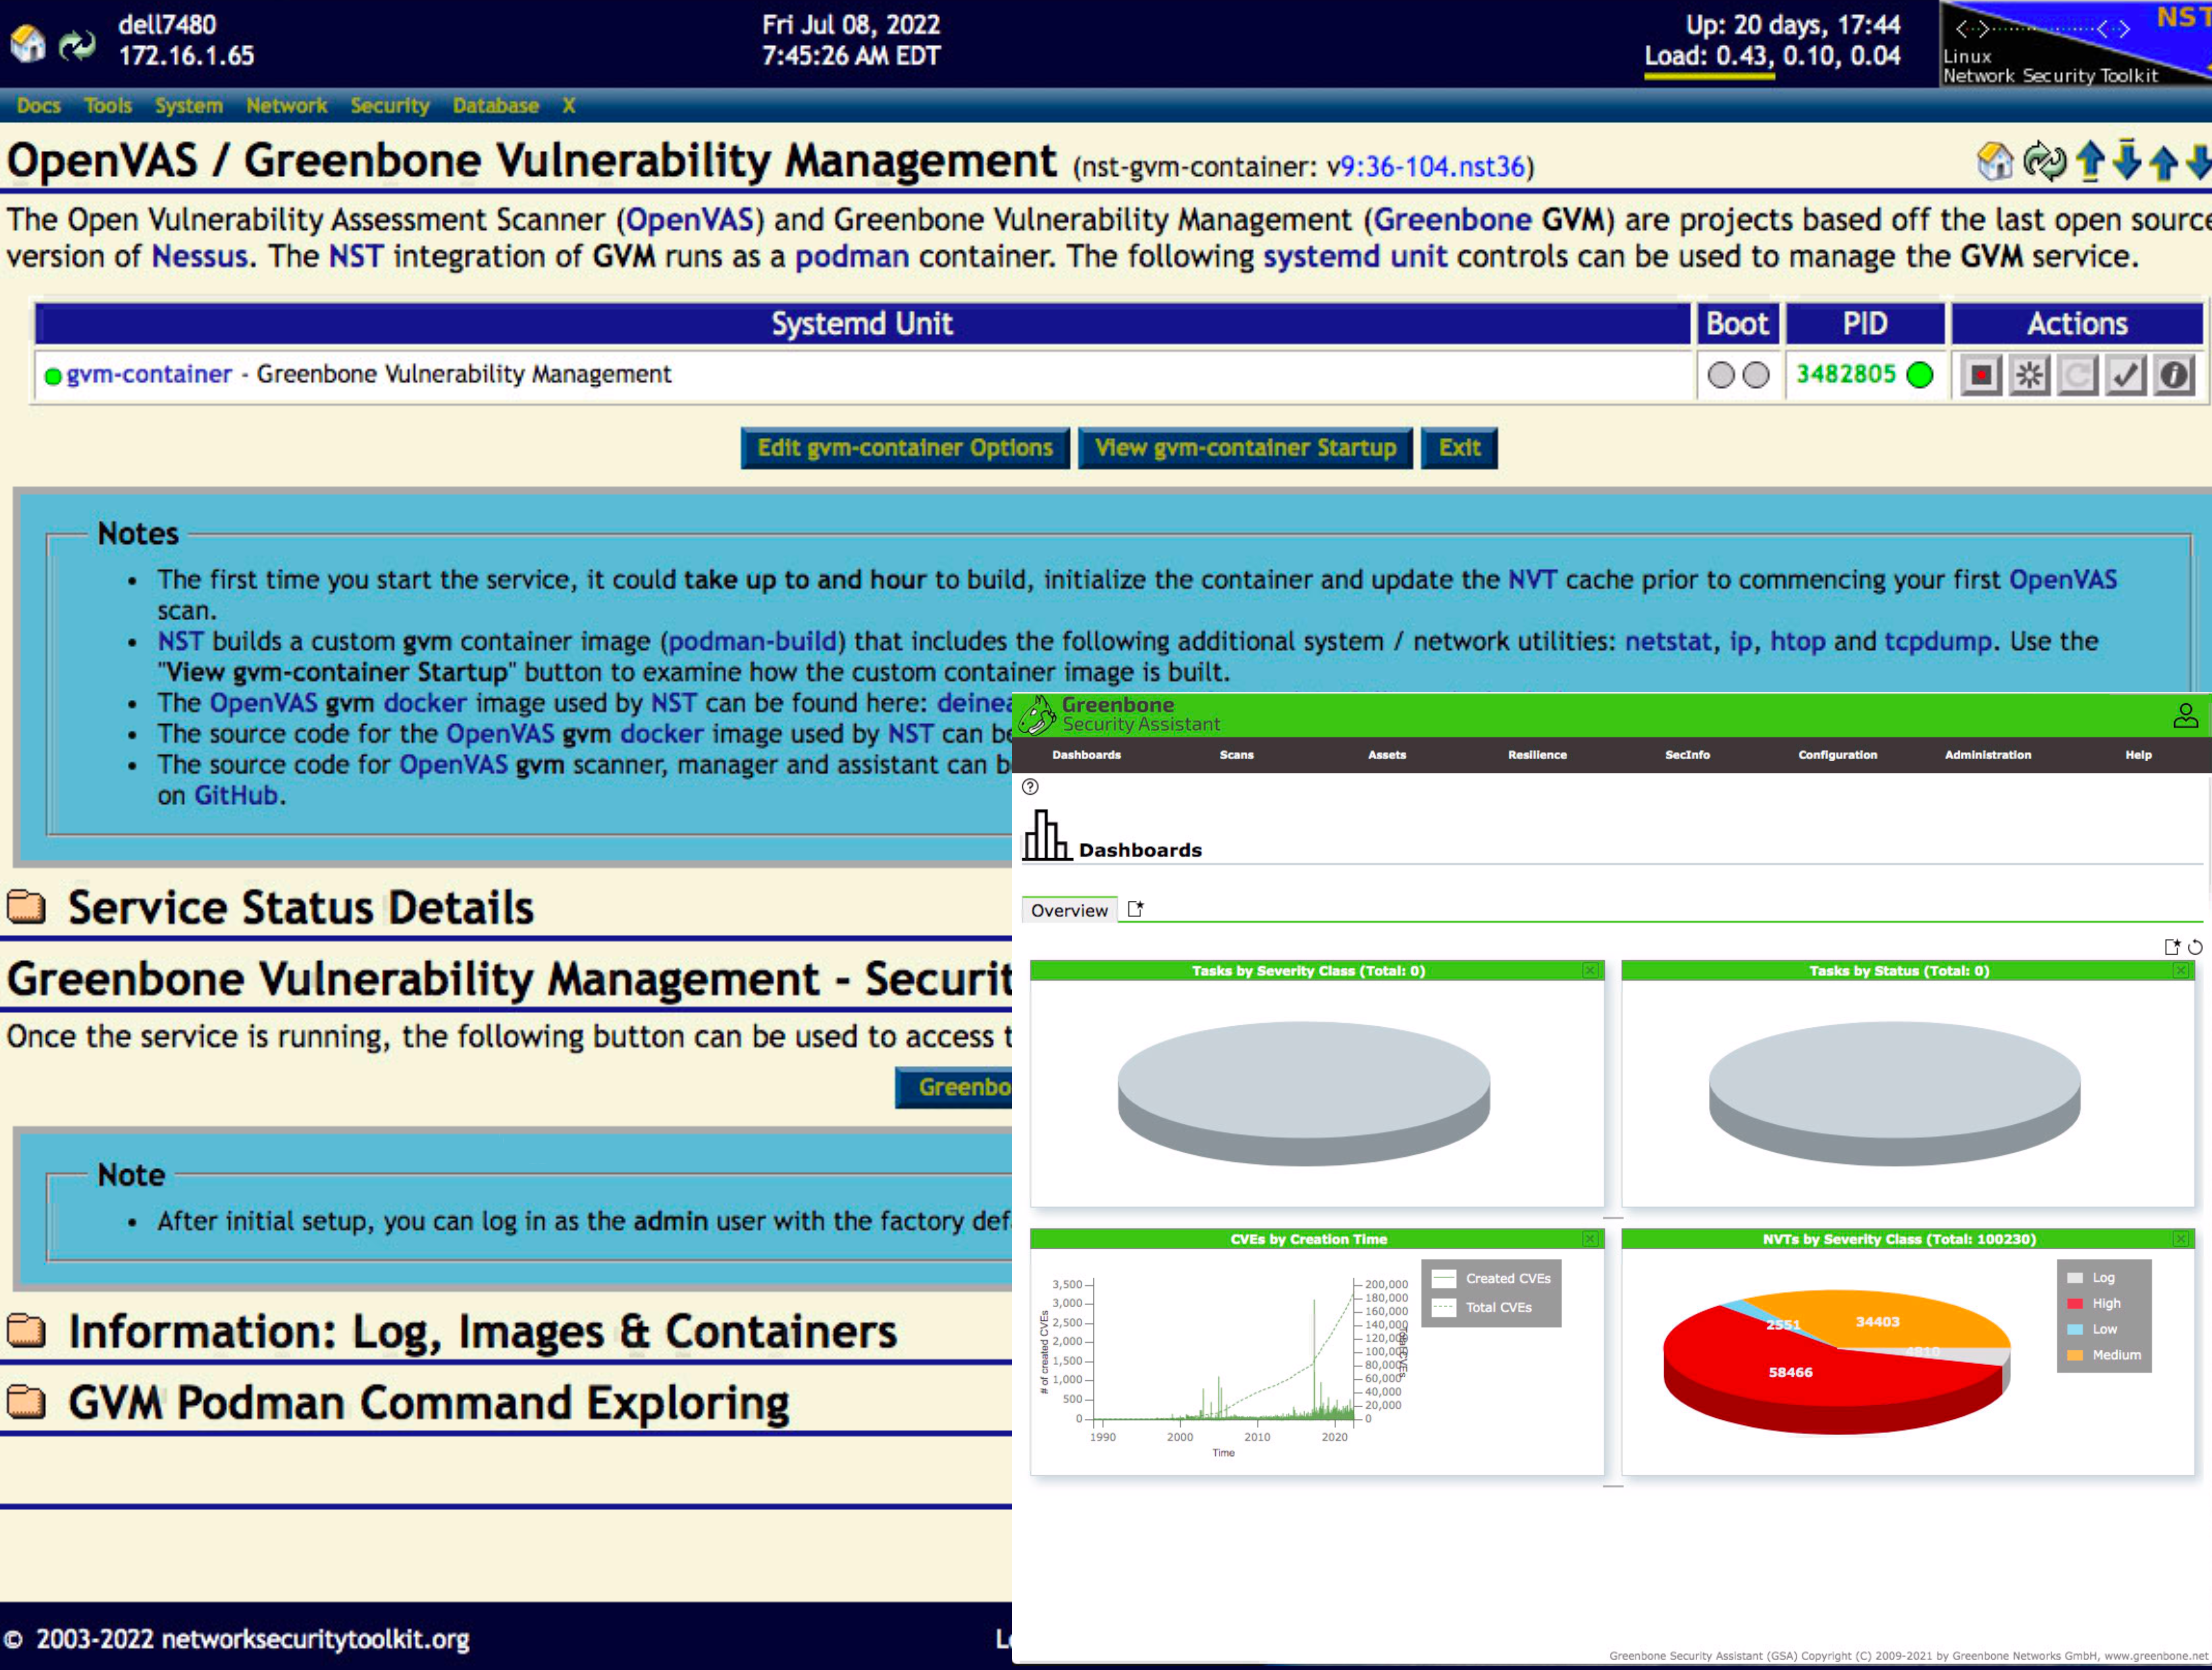 NST 36 Release - NST OpenVAS / Greenbone Vulnerability Management Integration